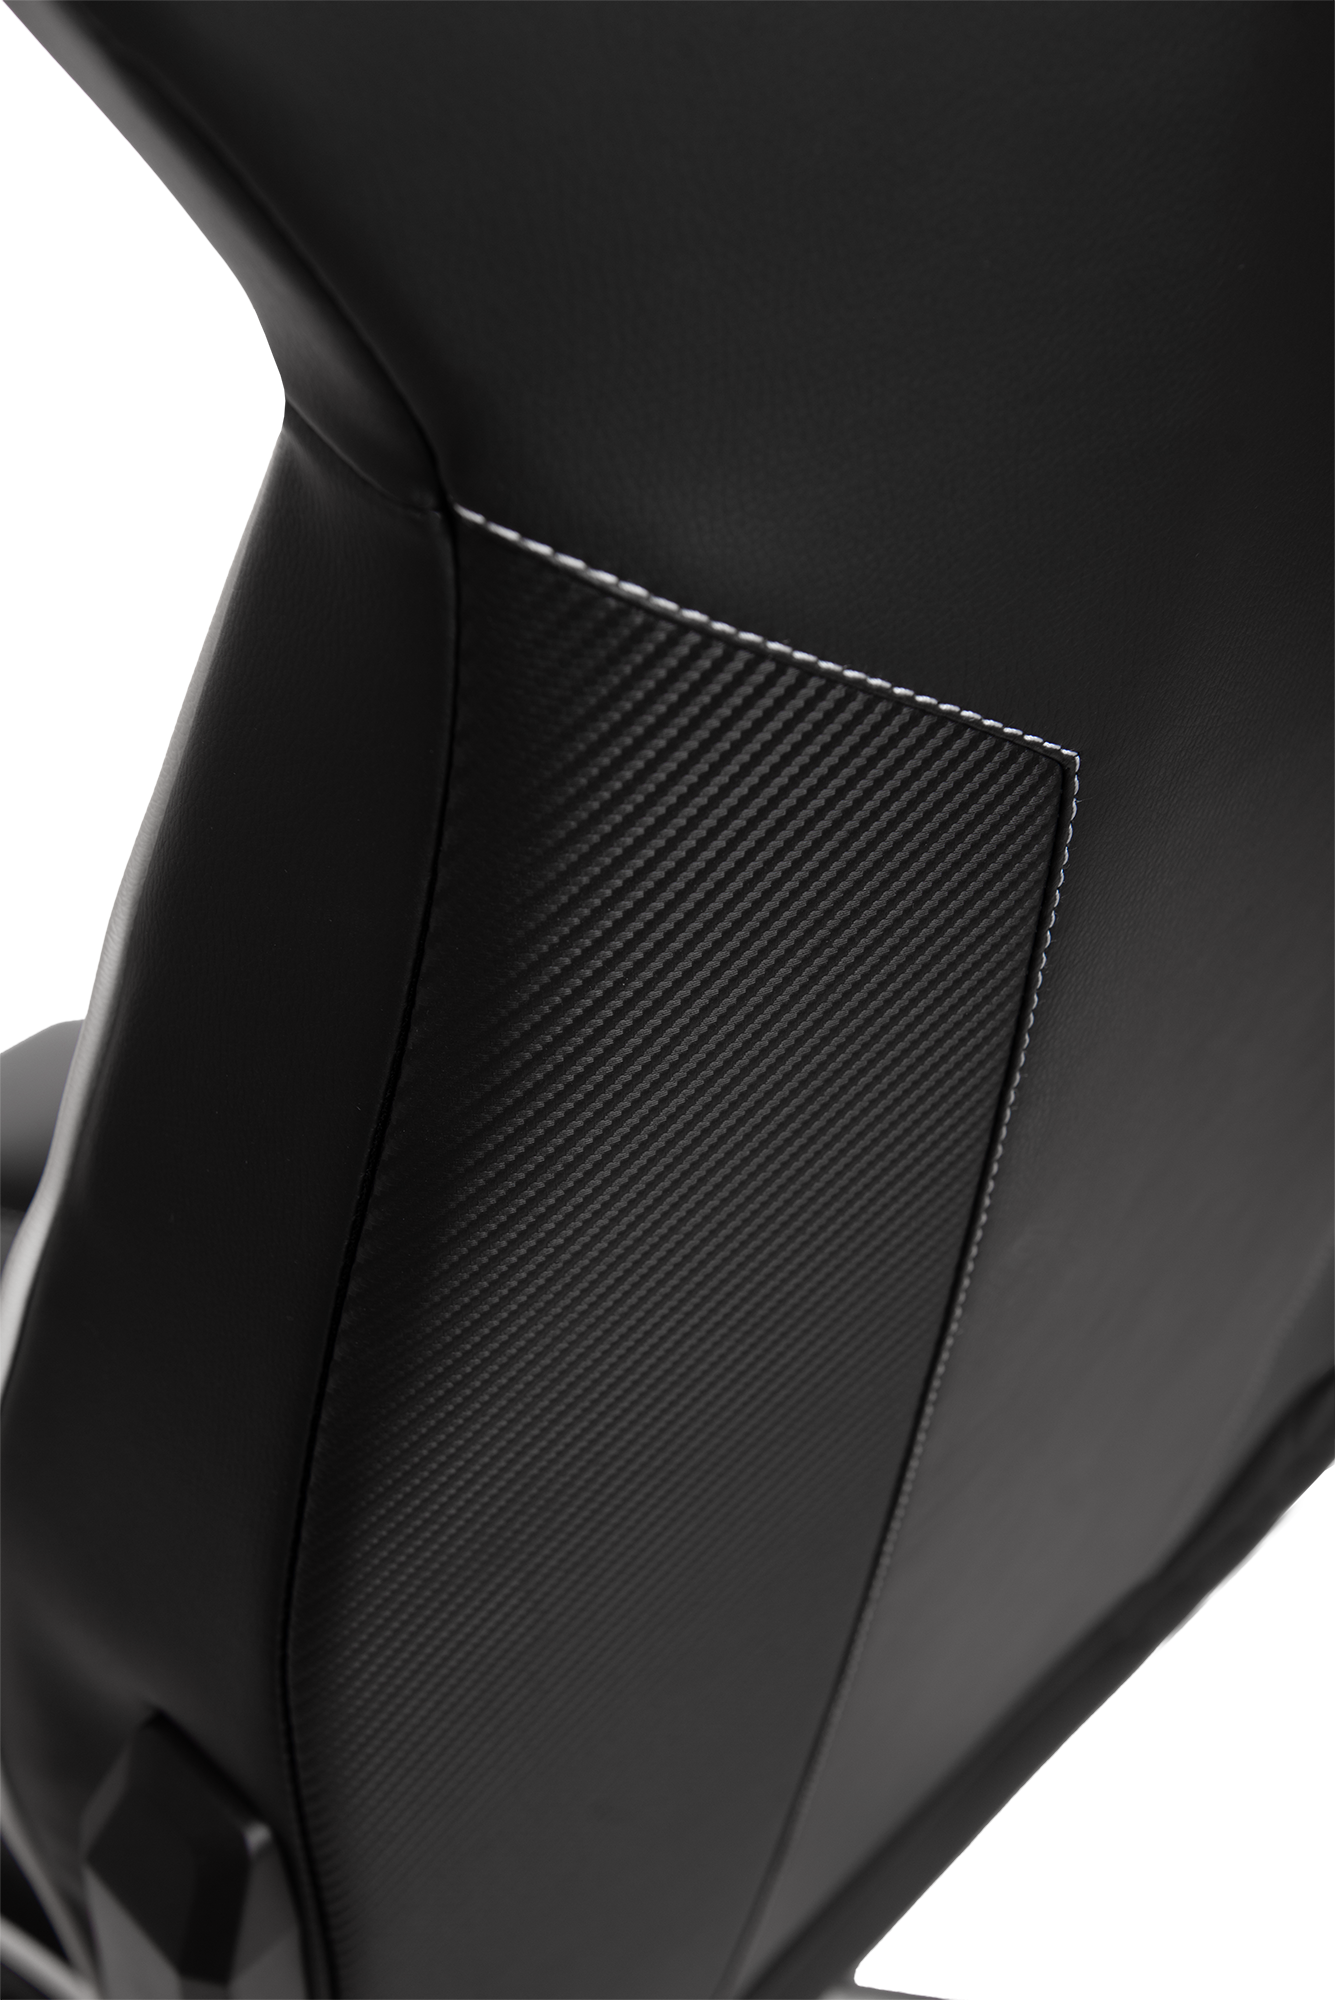 Геймерське крісло GT Racer чорне з білим (X-8007 Black/White) - фото 12